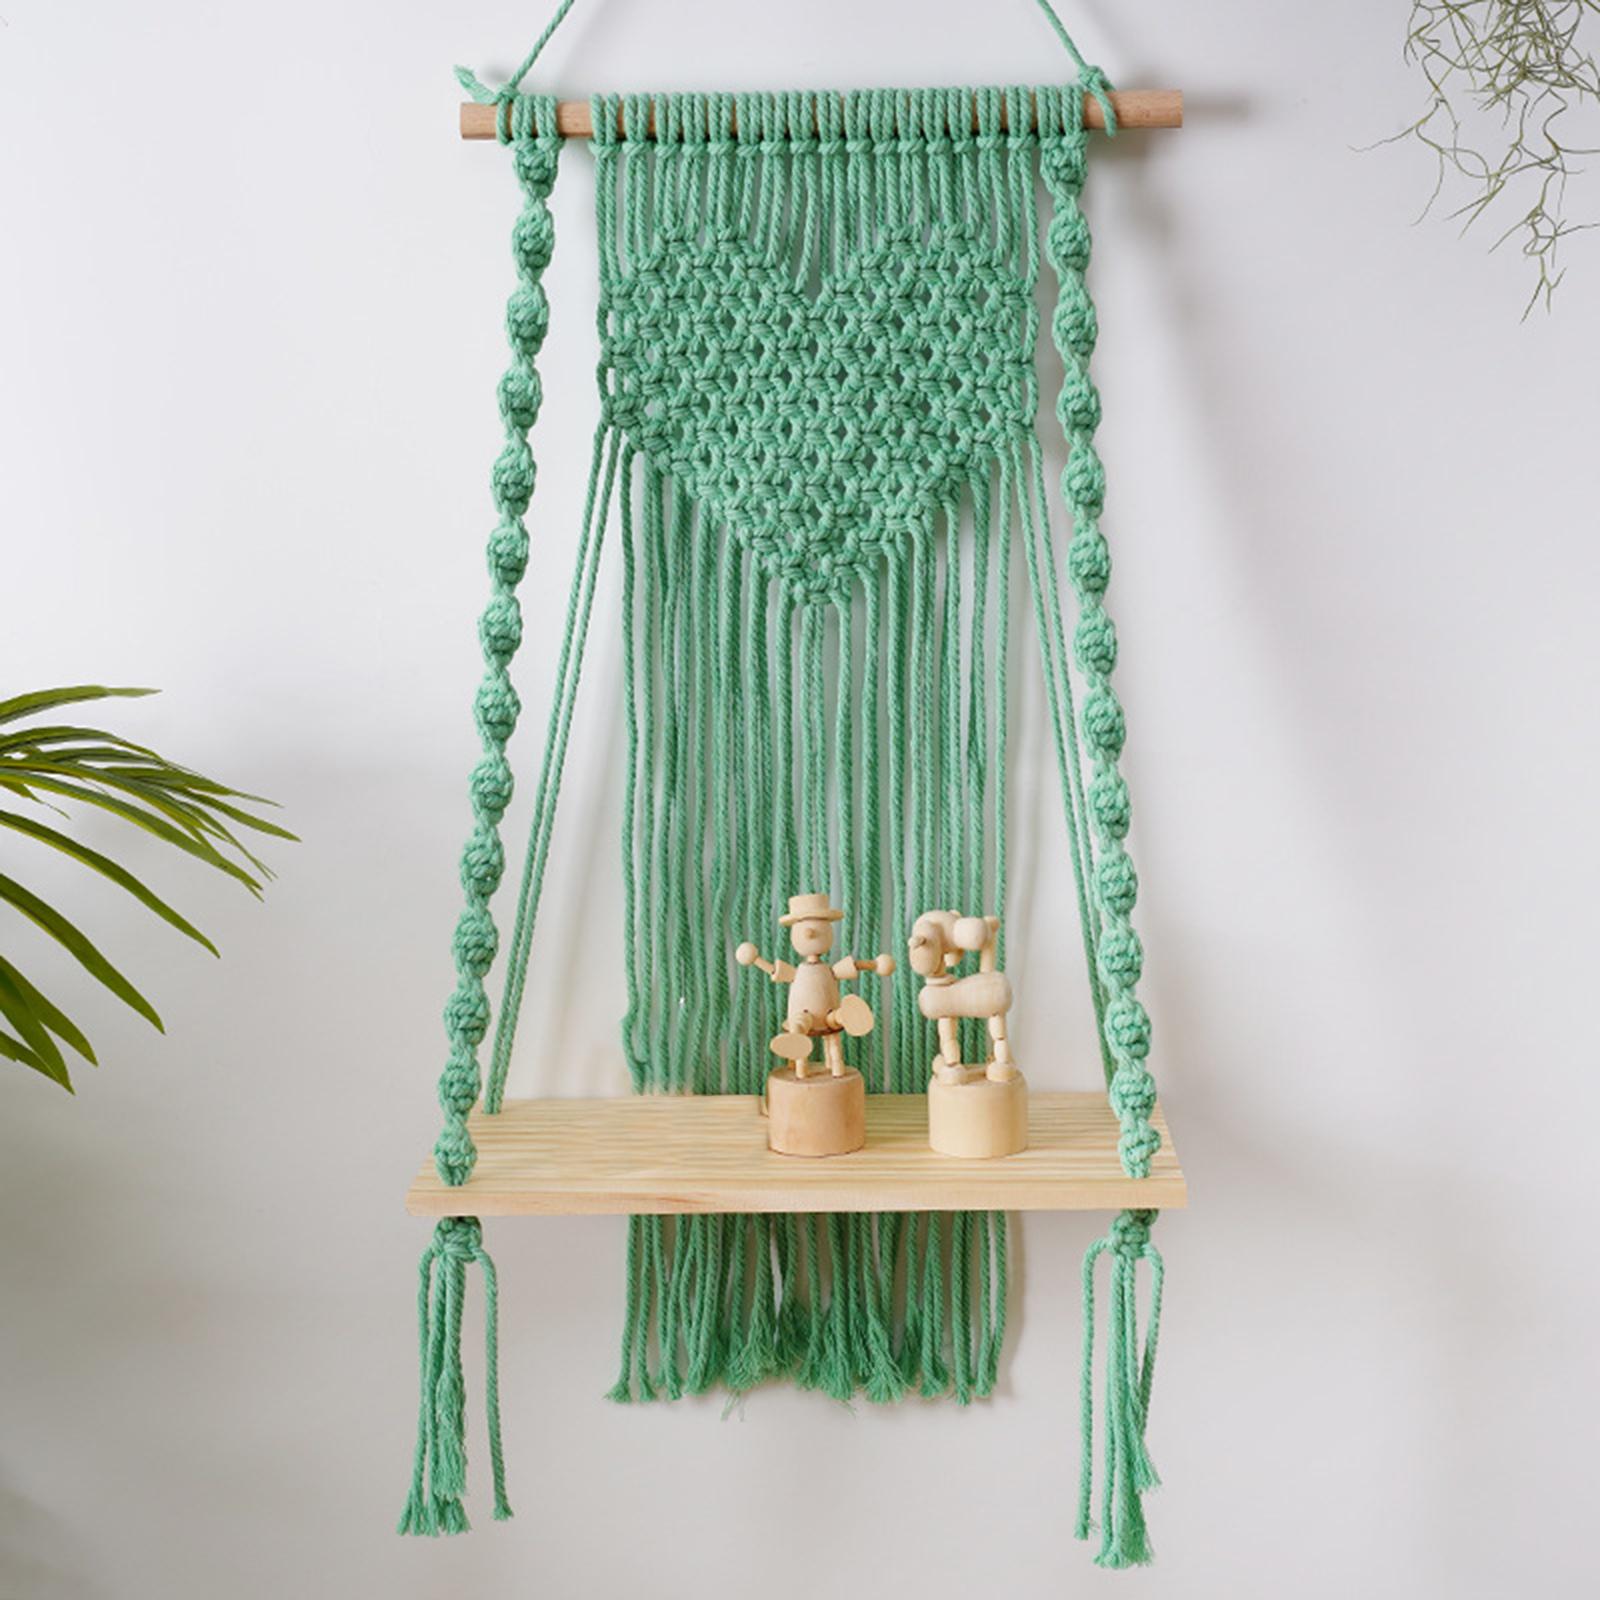 Macrame Wall Hanging Shelf Basket Hanger Holder Boho Woven Rope for Home Green